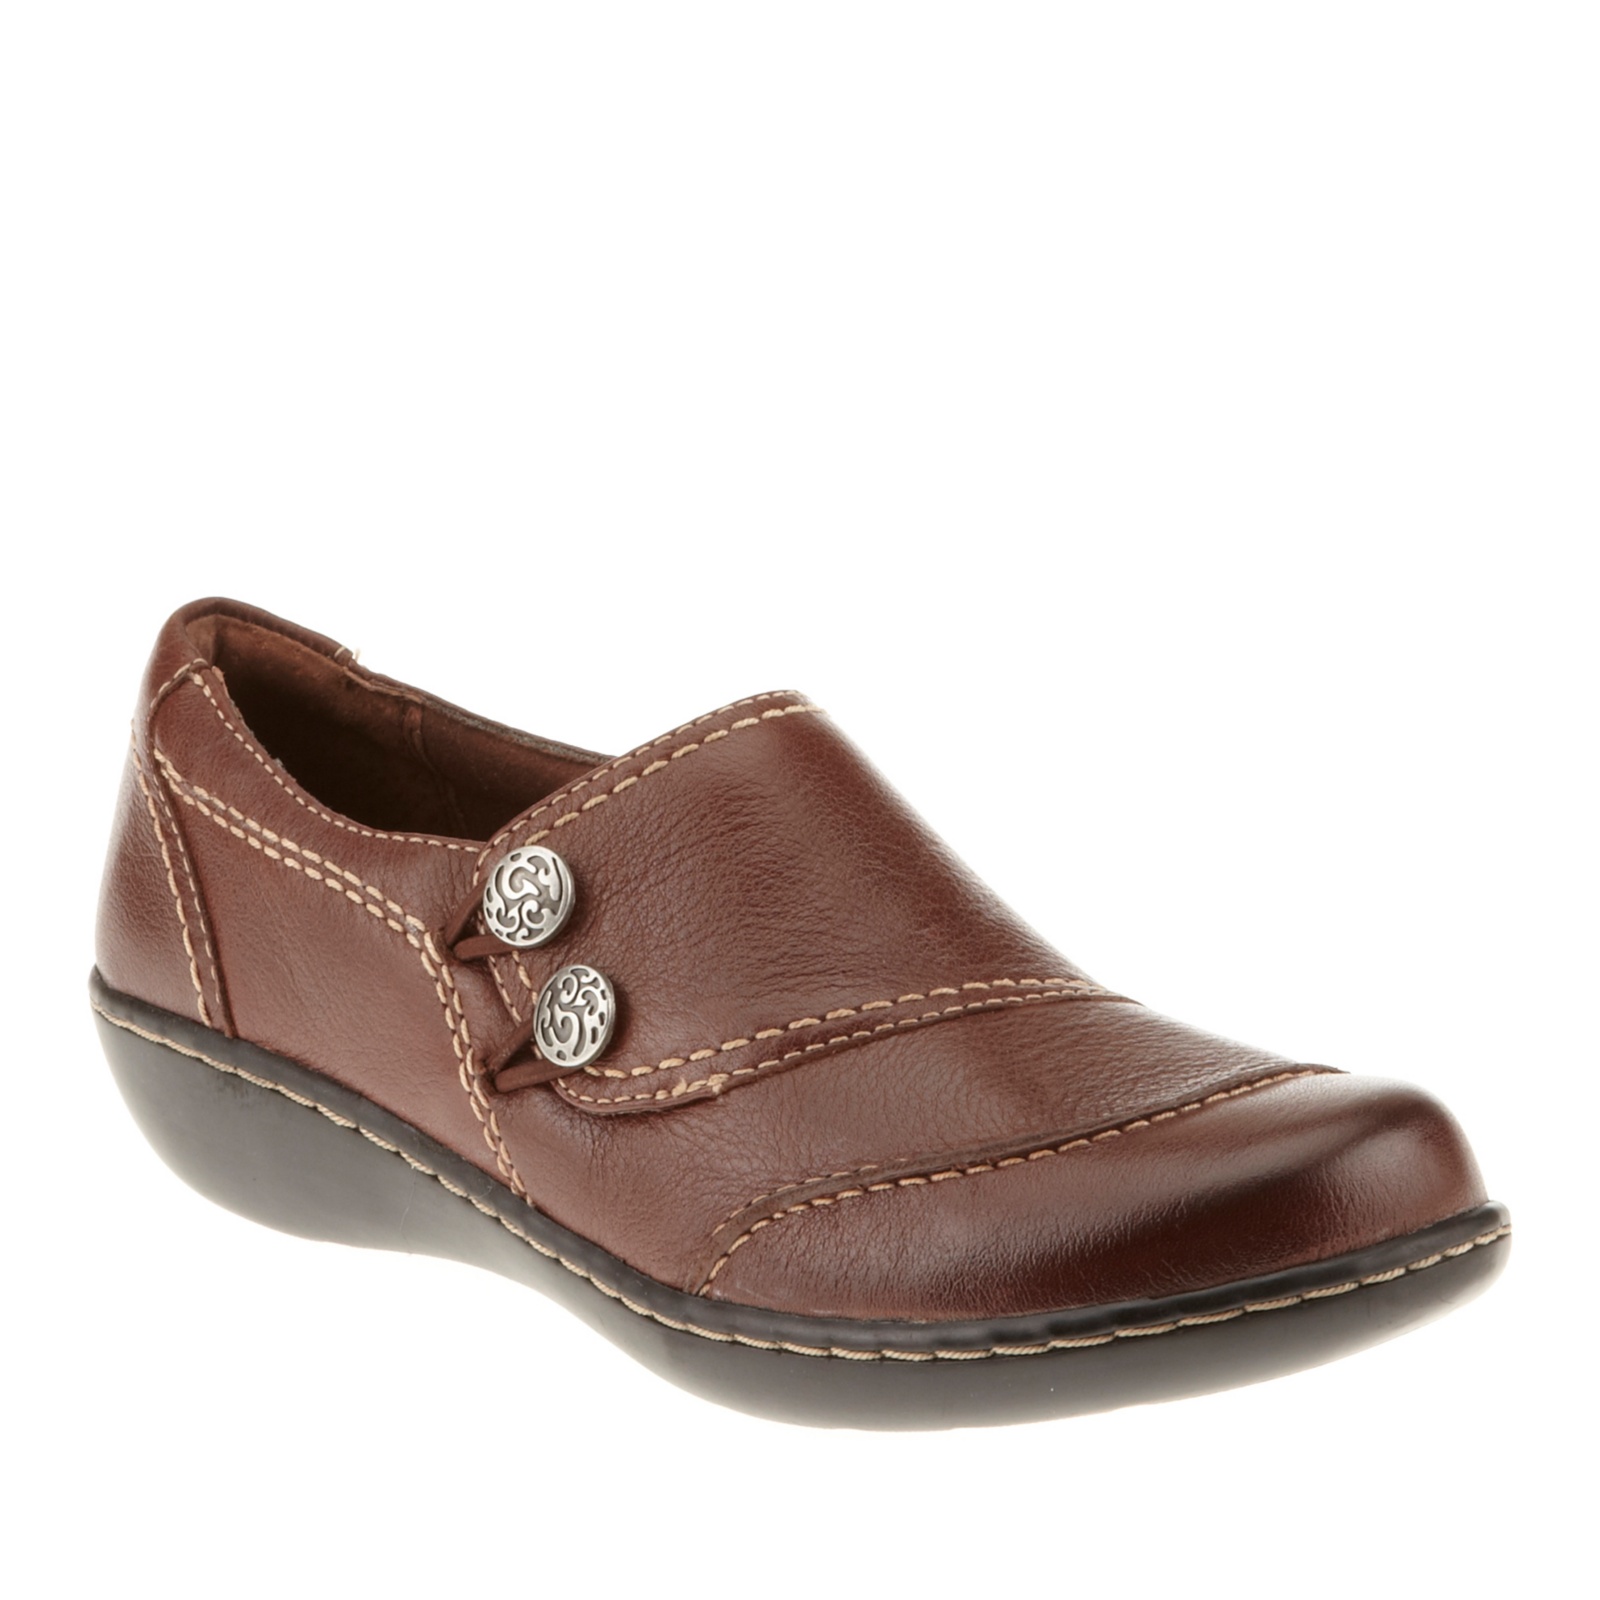 Clarks Bendables Ashland Alpine Slip on Shoes Mid Brown 7 M B M | eBay